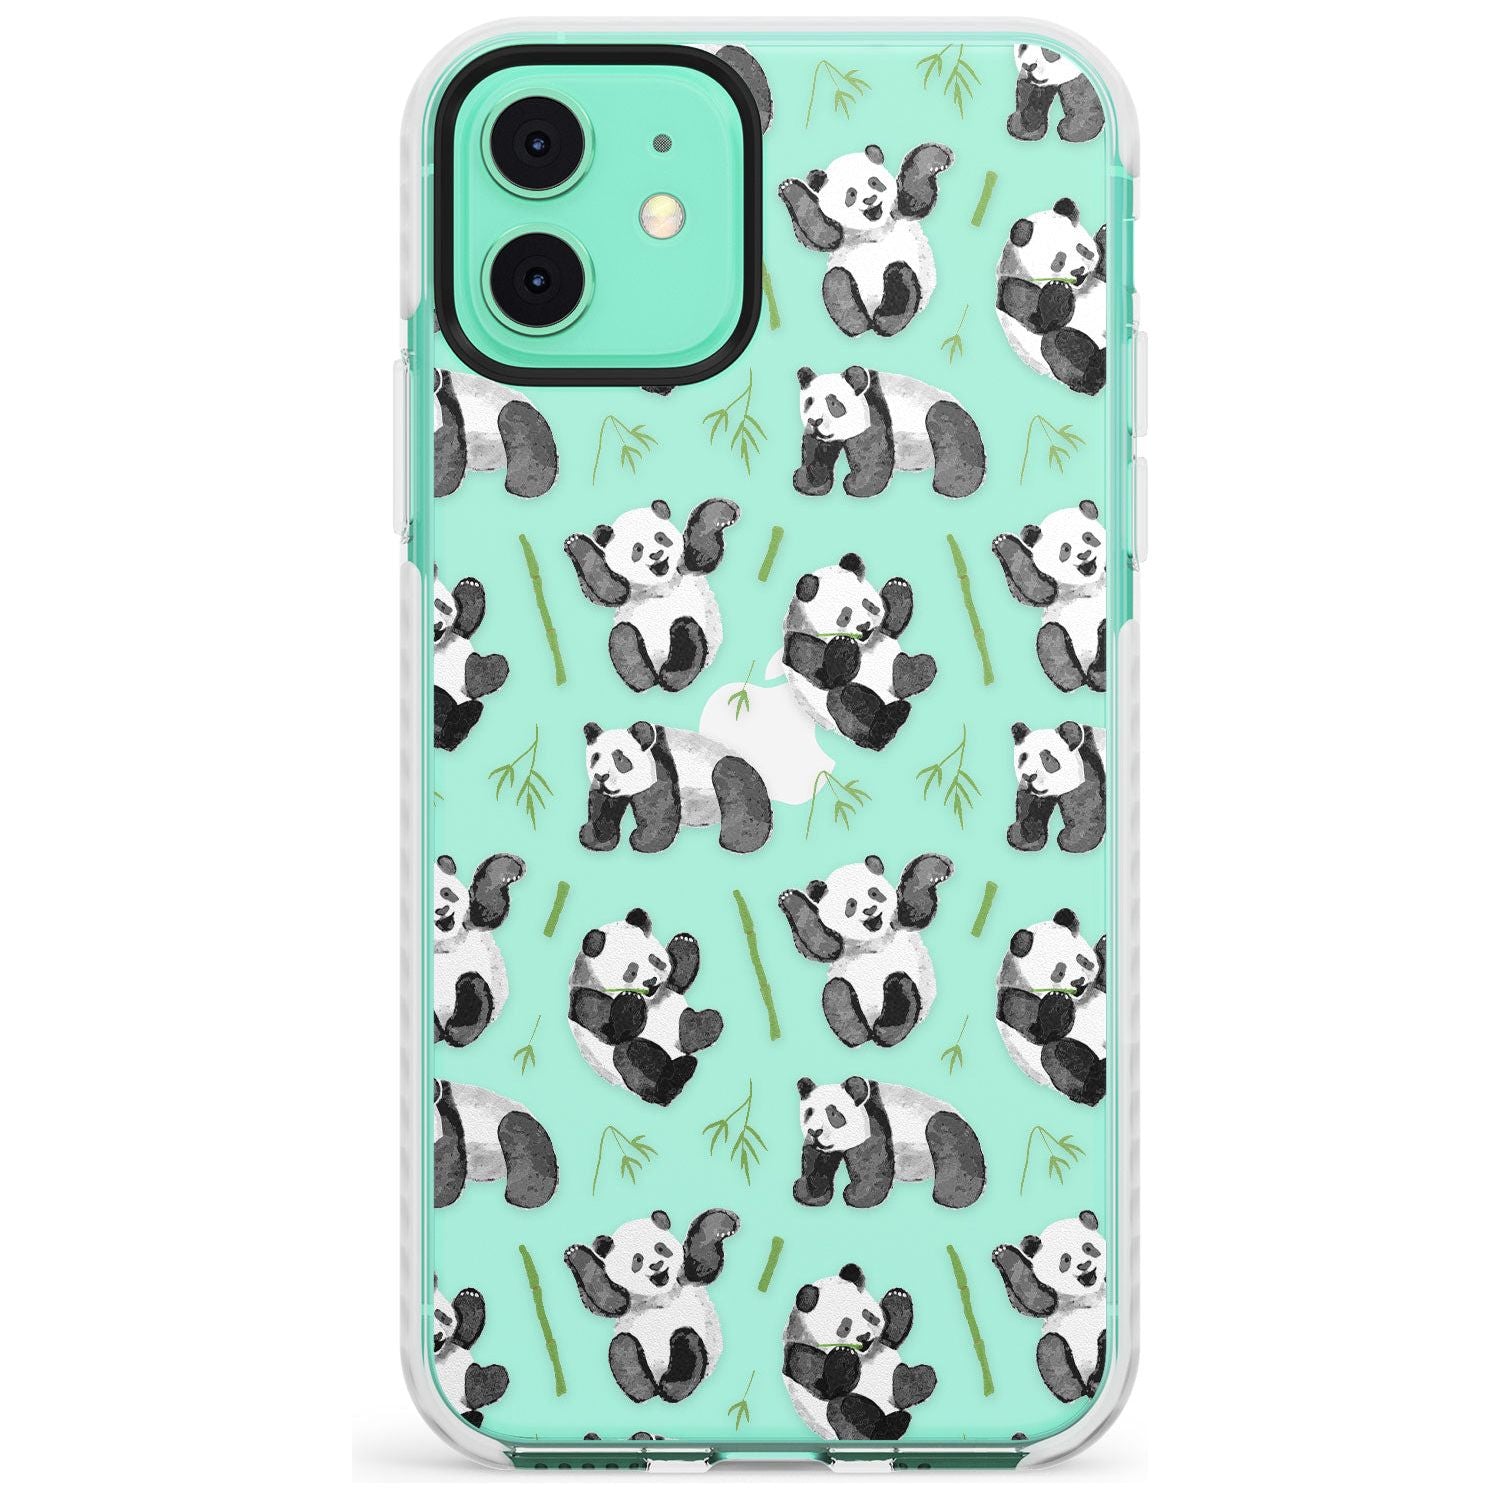 Watercolour Panda Pattern Slim TPU Phone Case for iPhone 11